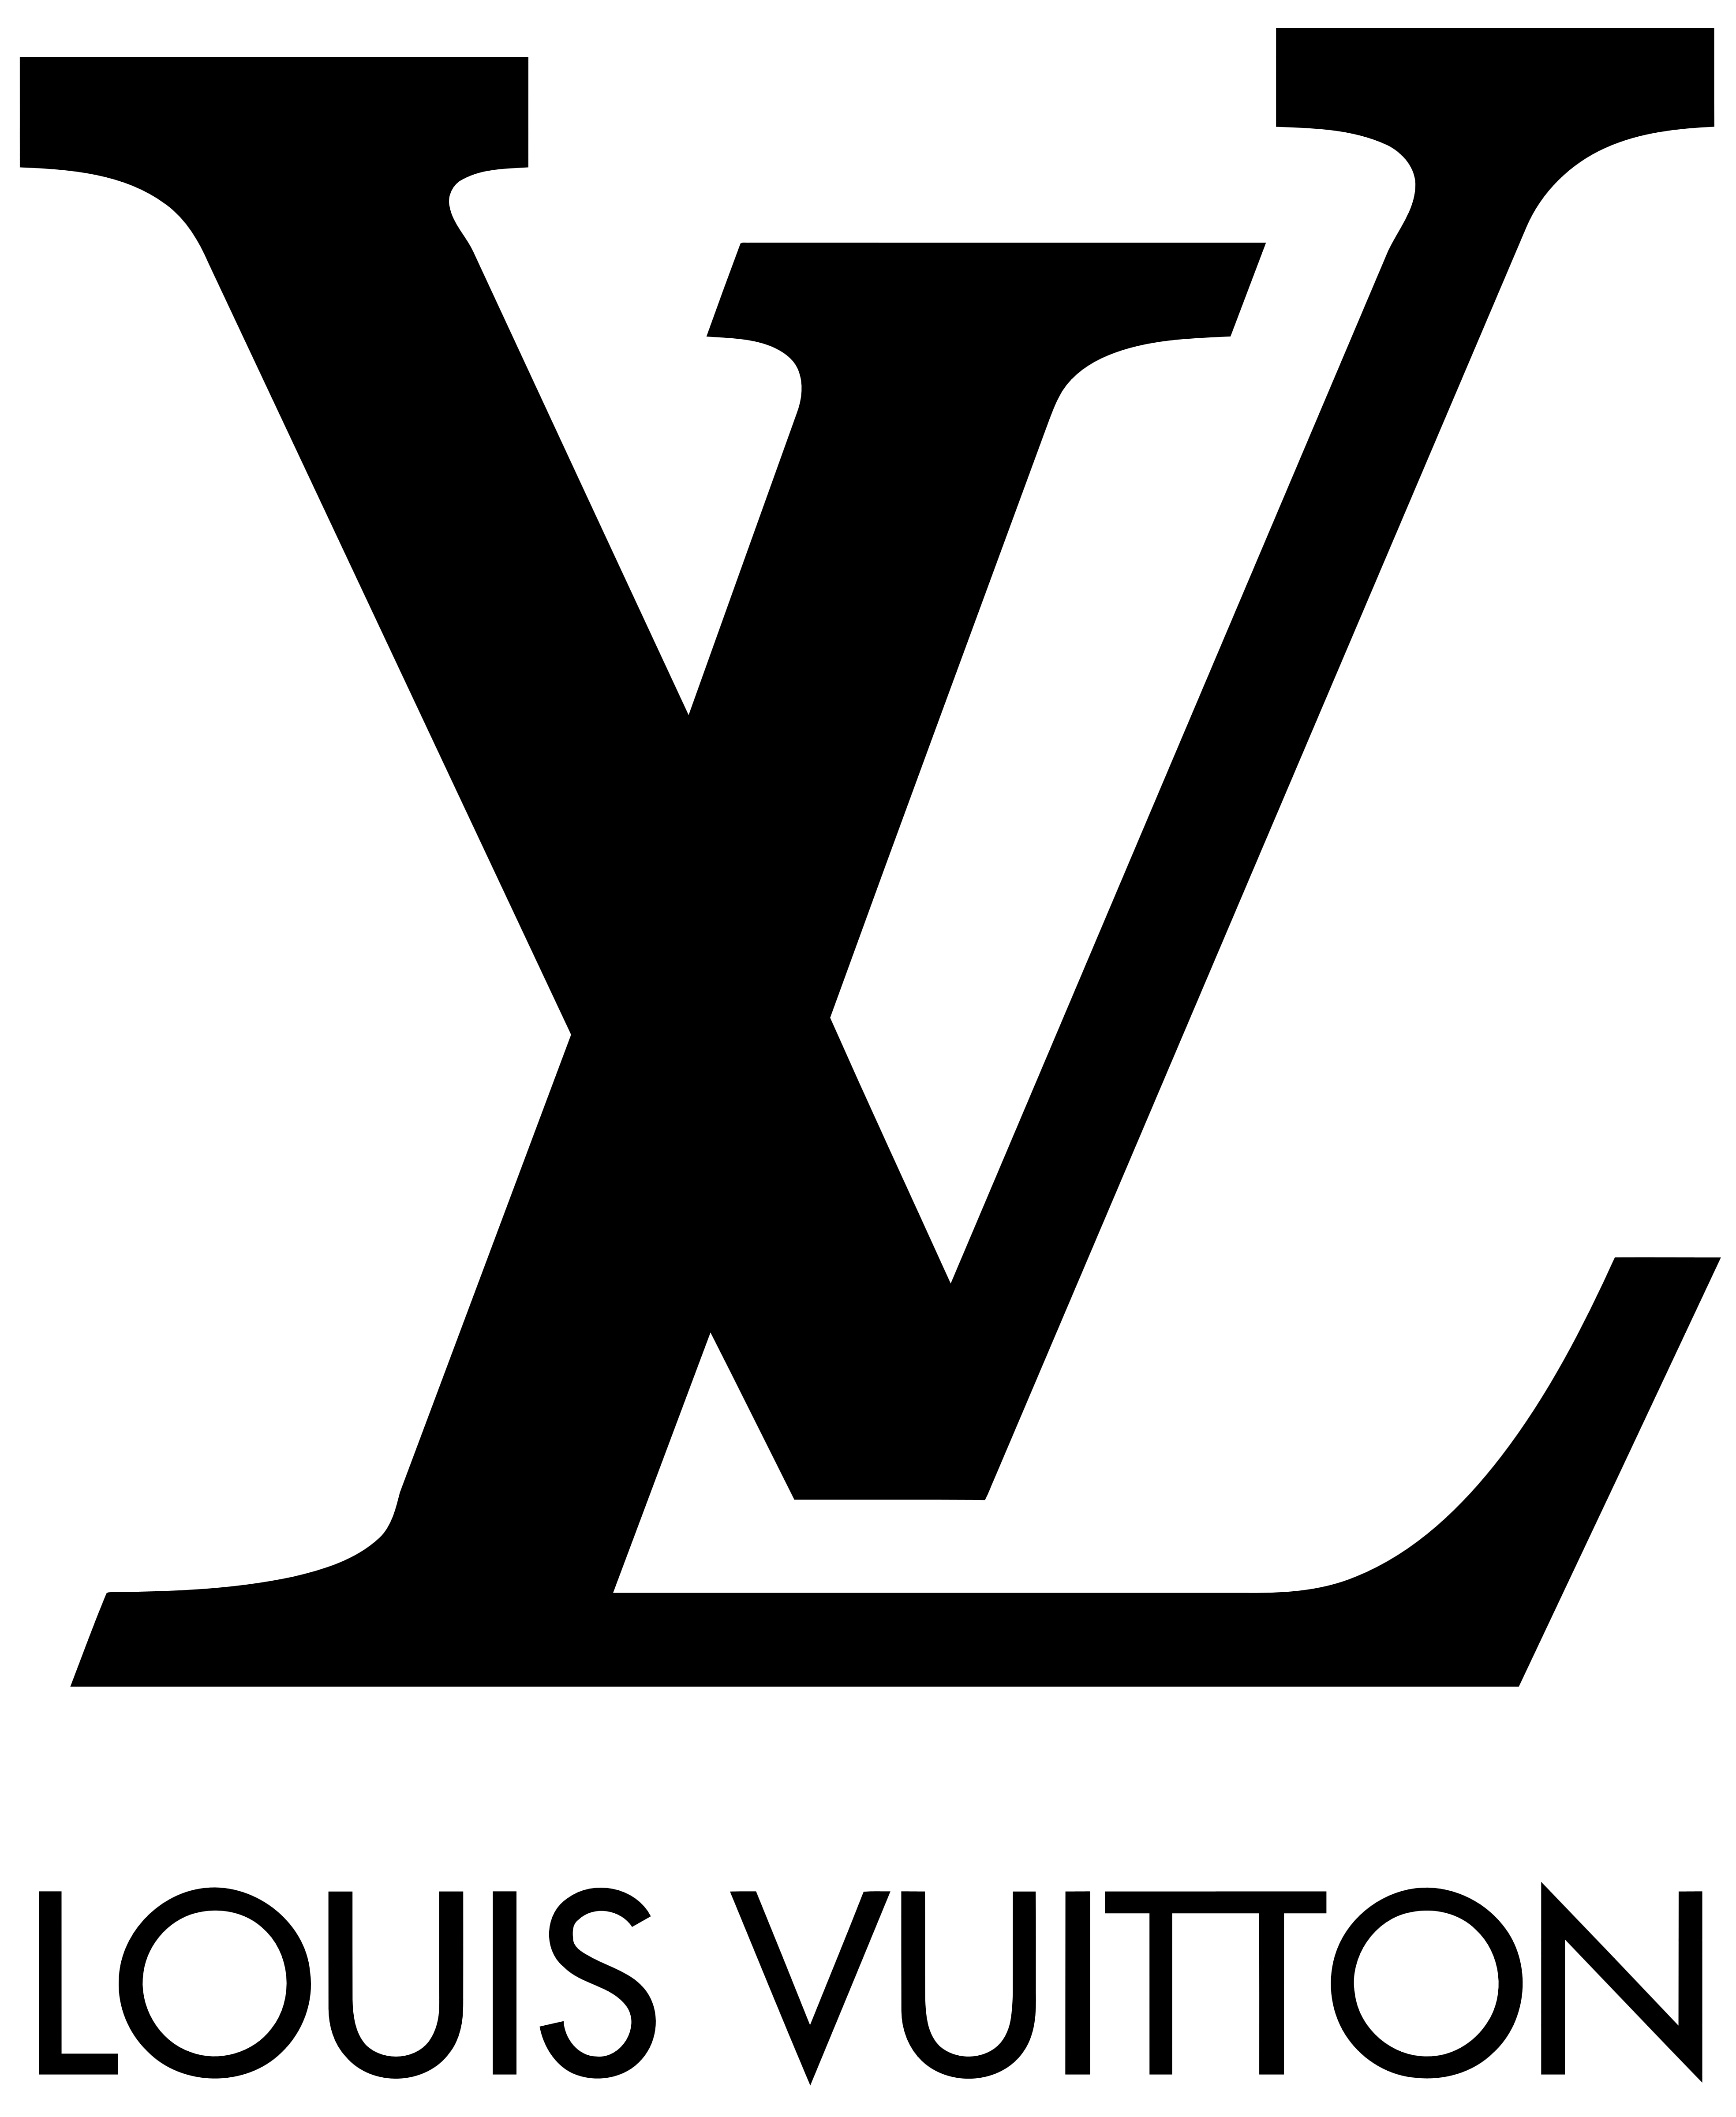 Louis Vuitton Logo by TeVesMuyNerviosa on DeviantArt